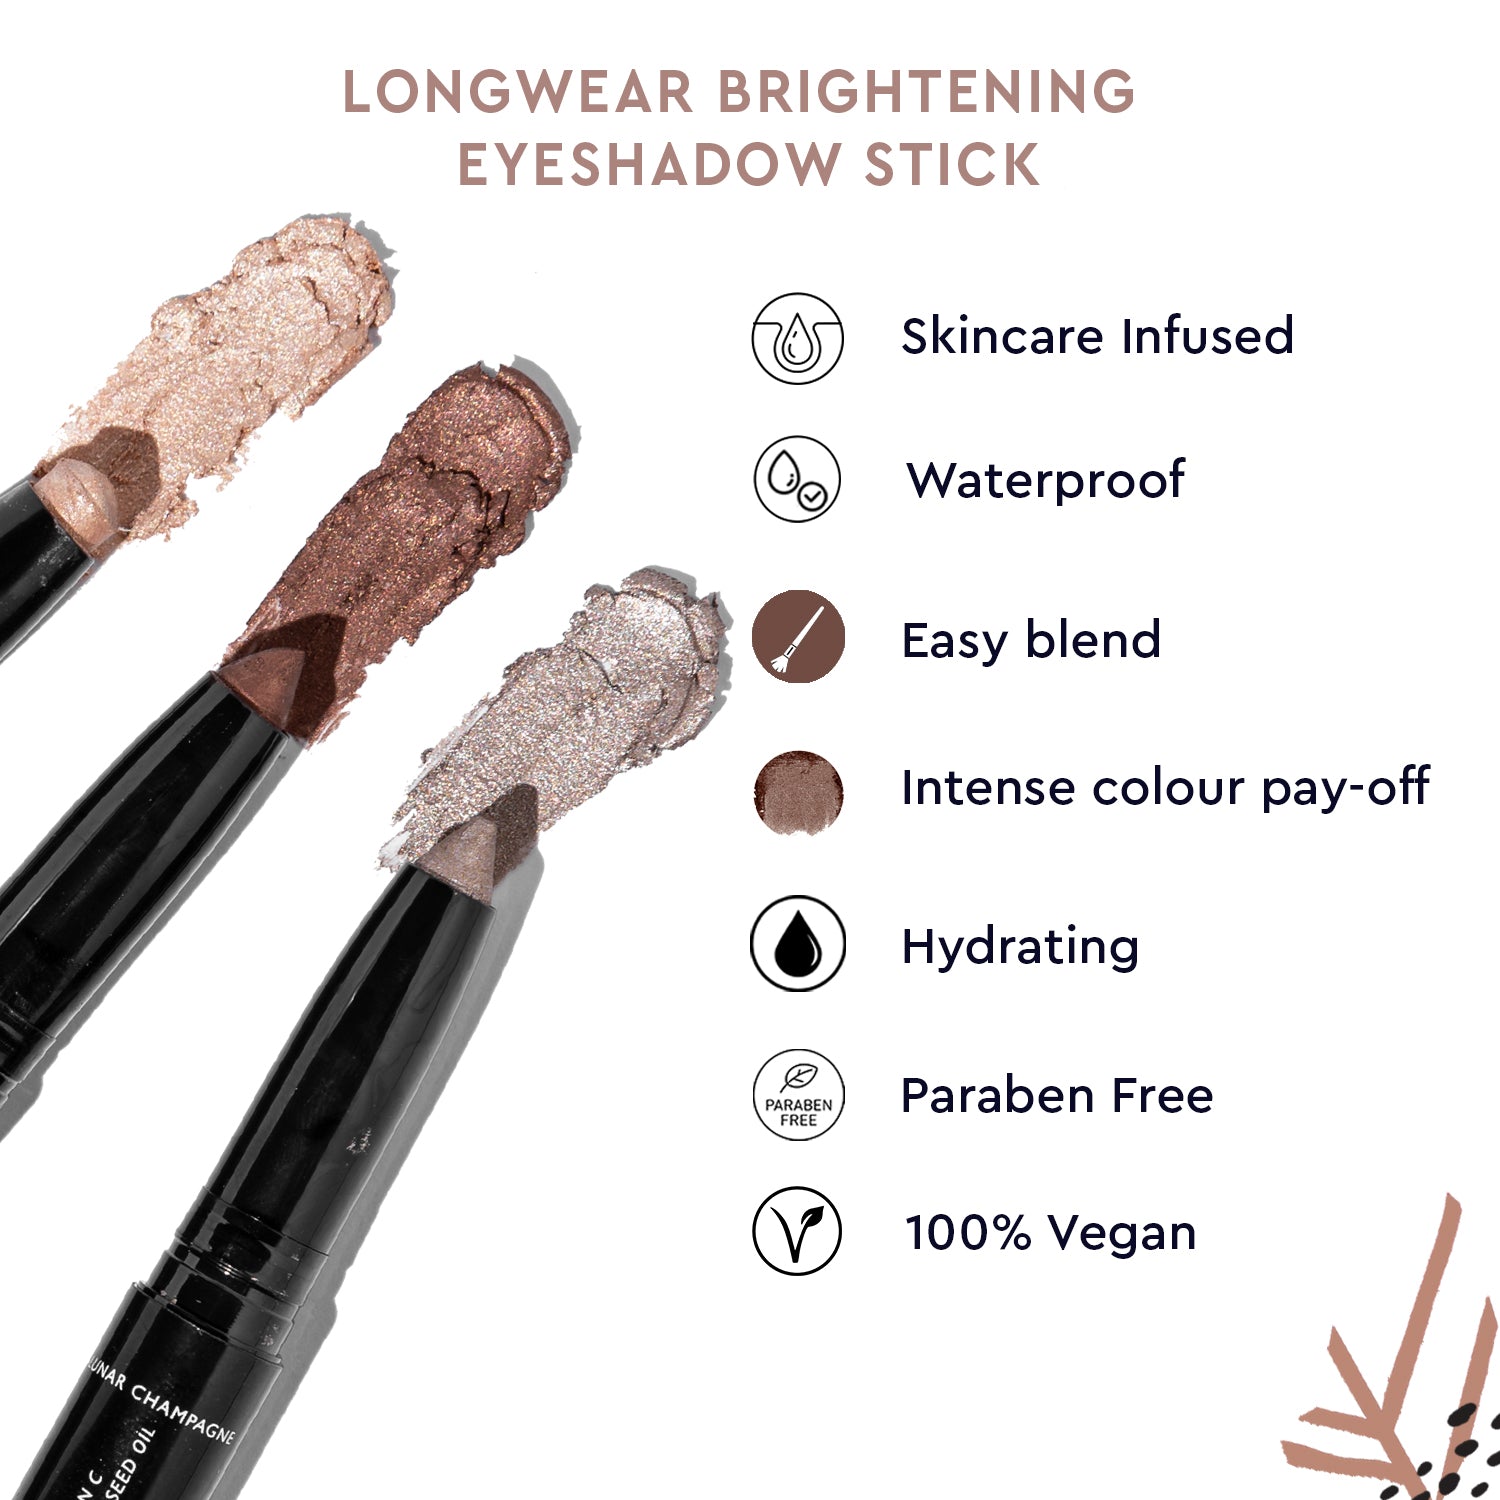 Longwear Brightening Eyeshadow Stick